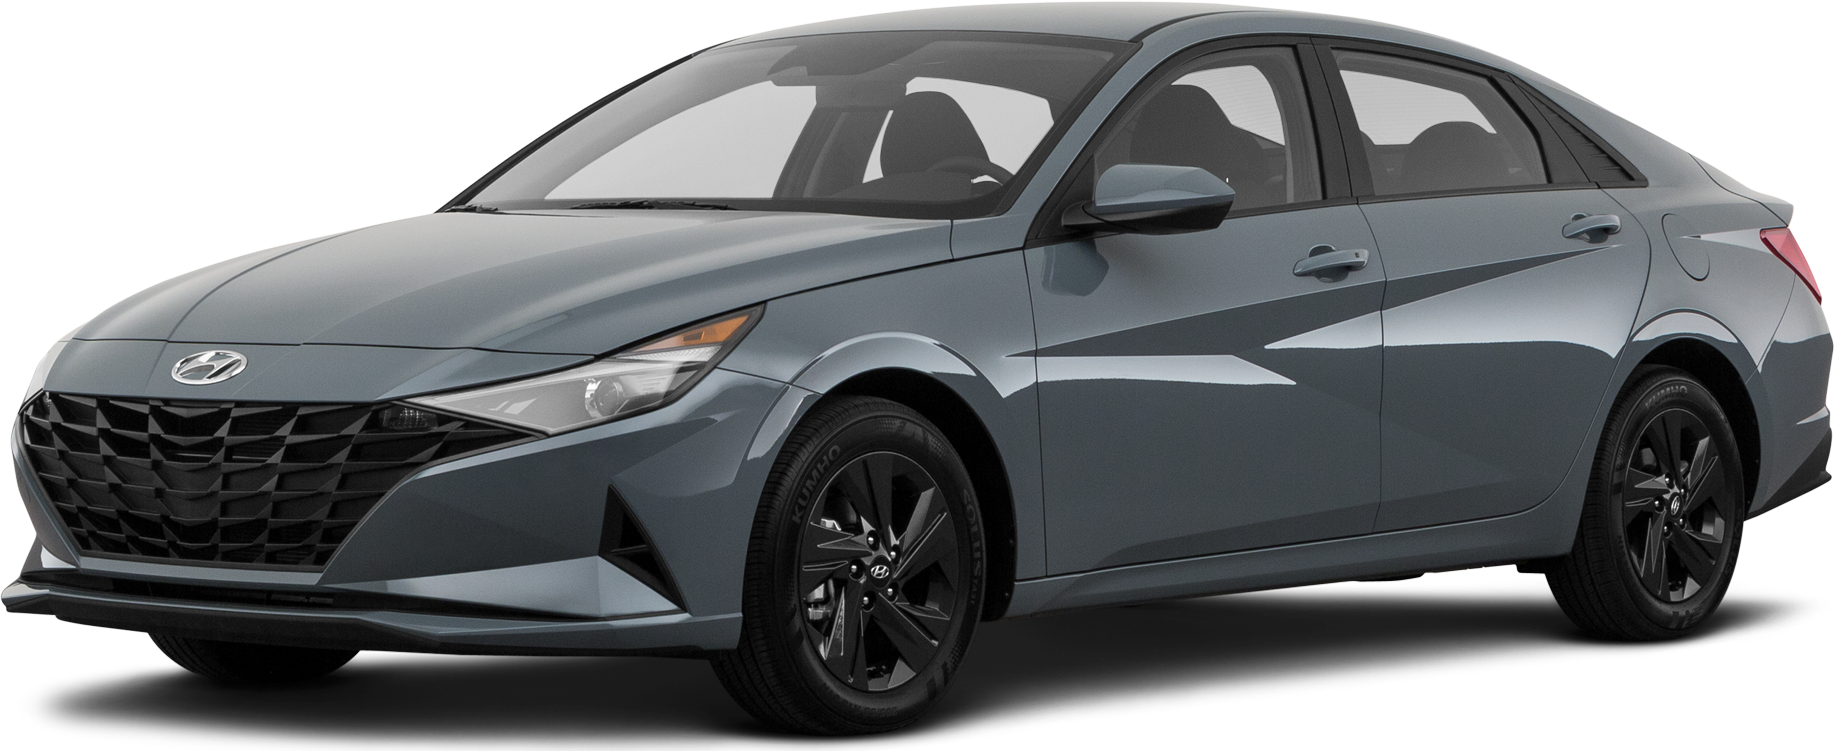 New 2023 Hyundai Elantra Reviews, Pricing & Specs | Kelley Blue Book